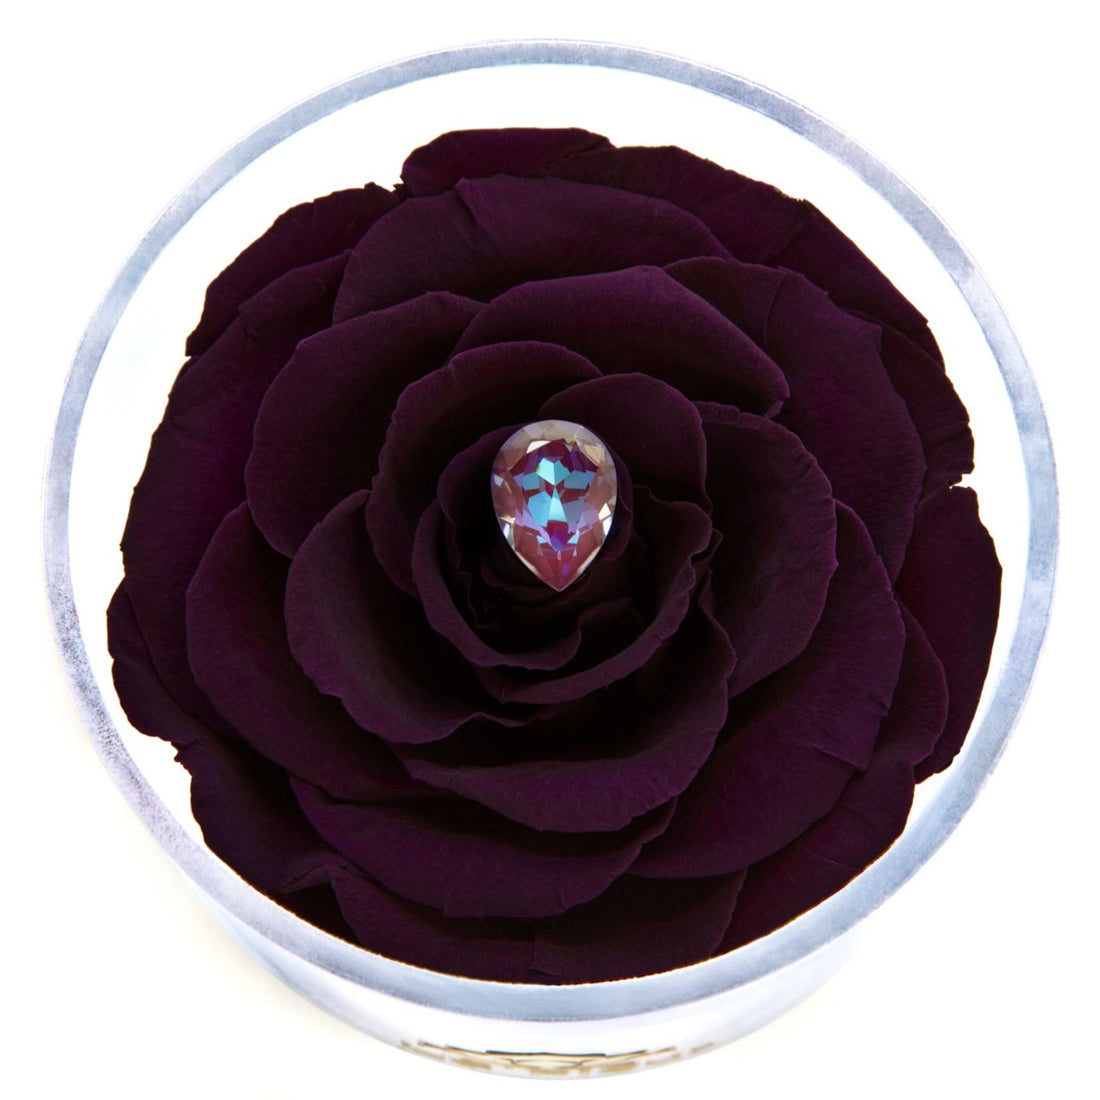 Birthstone Collection - June by La Fleur Lifetime Flowers